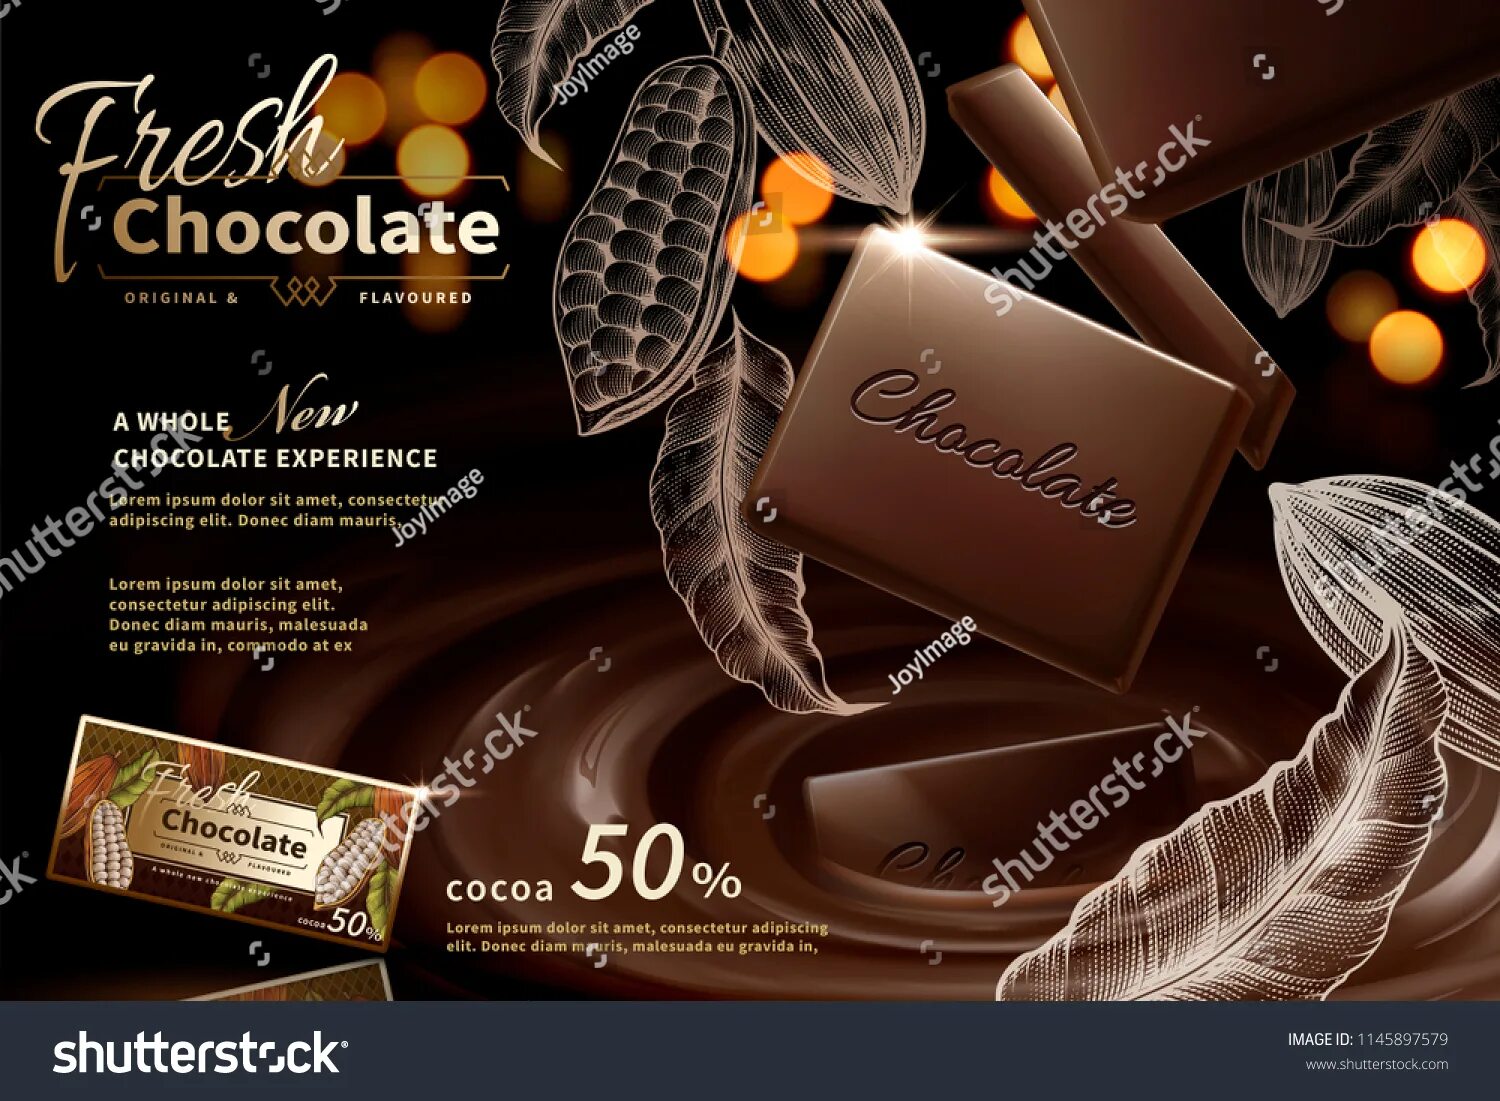 Шоколад афиша. Реклама шоколада. Рекламный плакат шоколада. Шоколадная реклама. Реклама шоколада афиша.